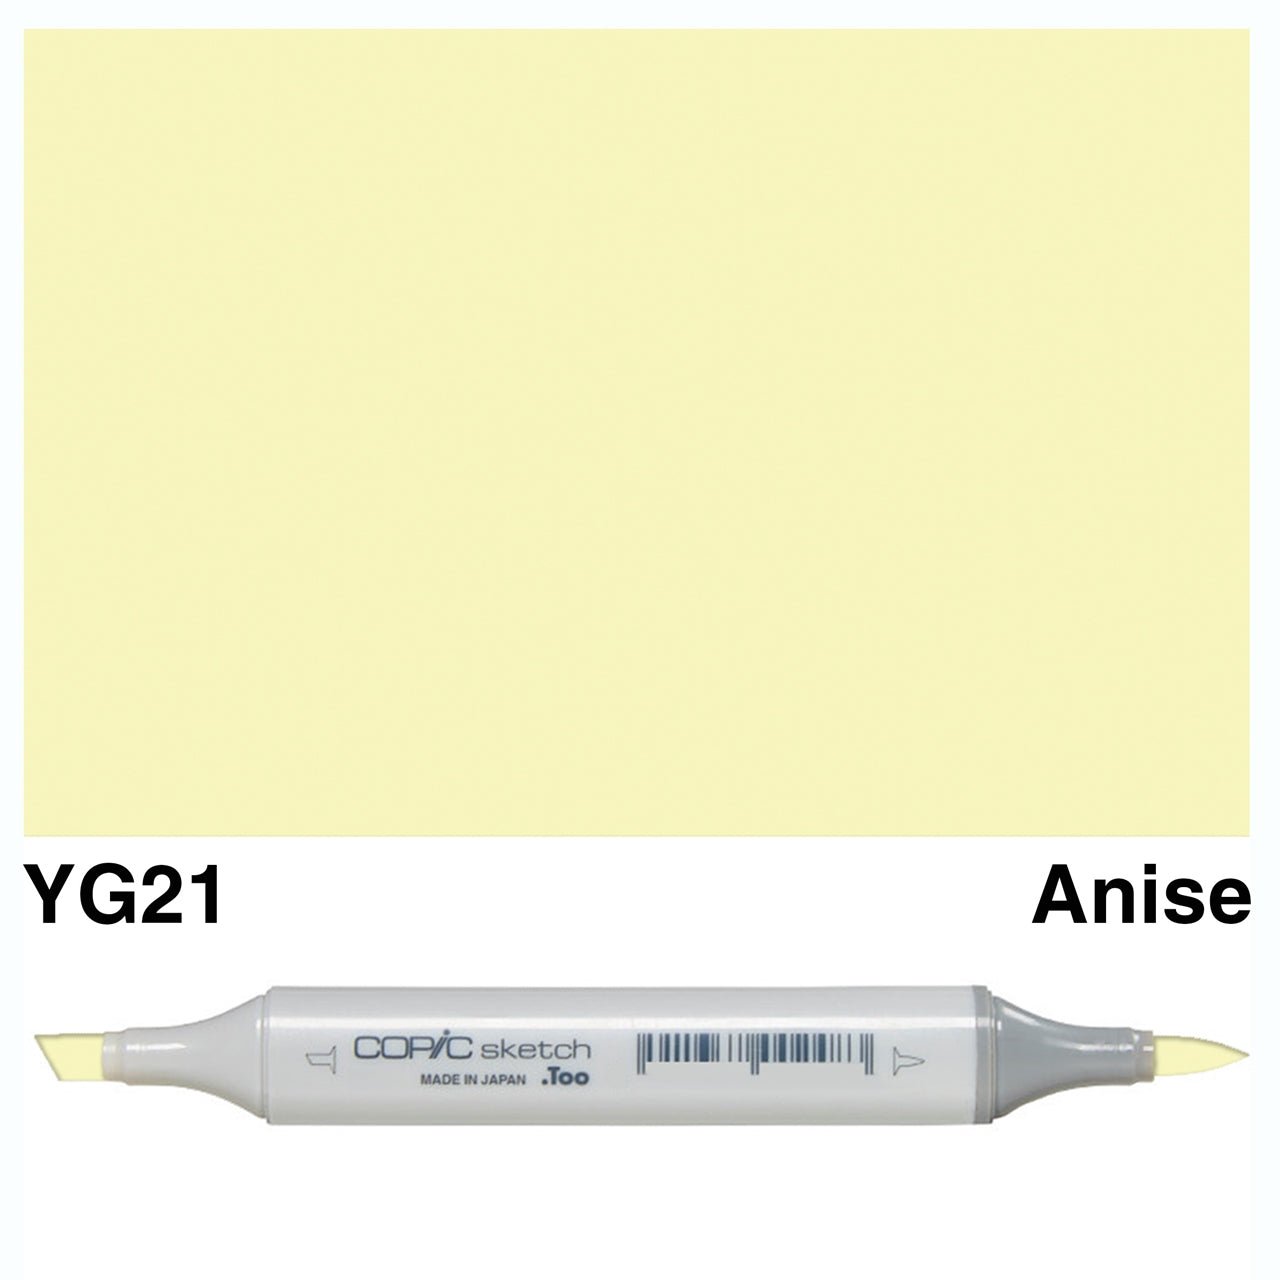 Copic Sketch YG21 Anise - theartshop.com.au